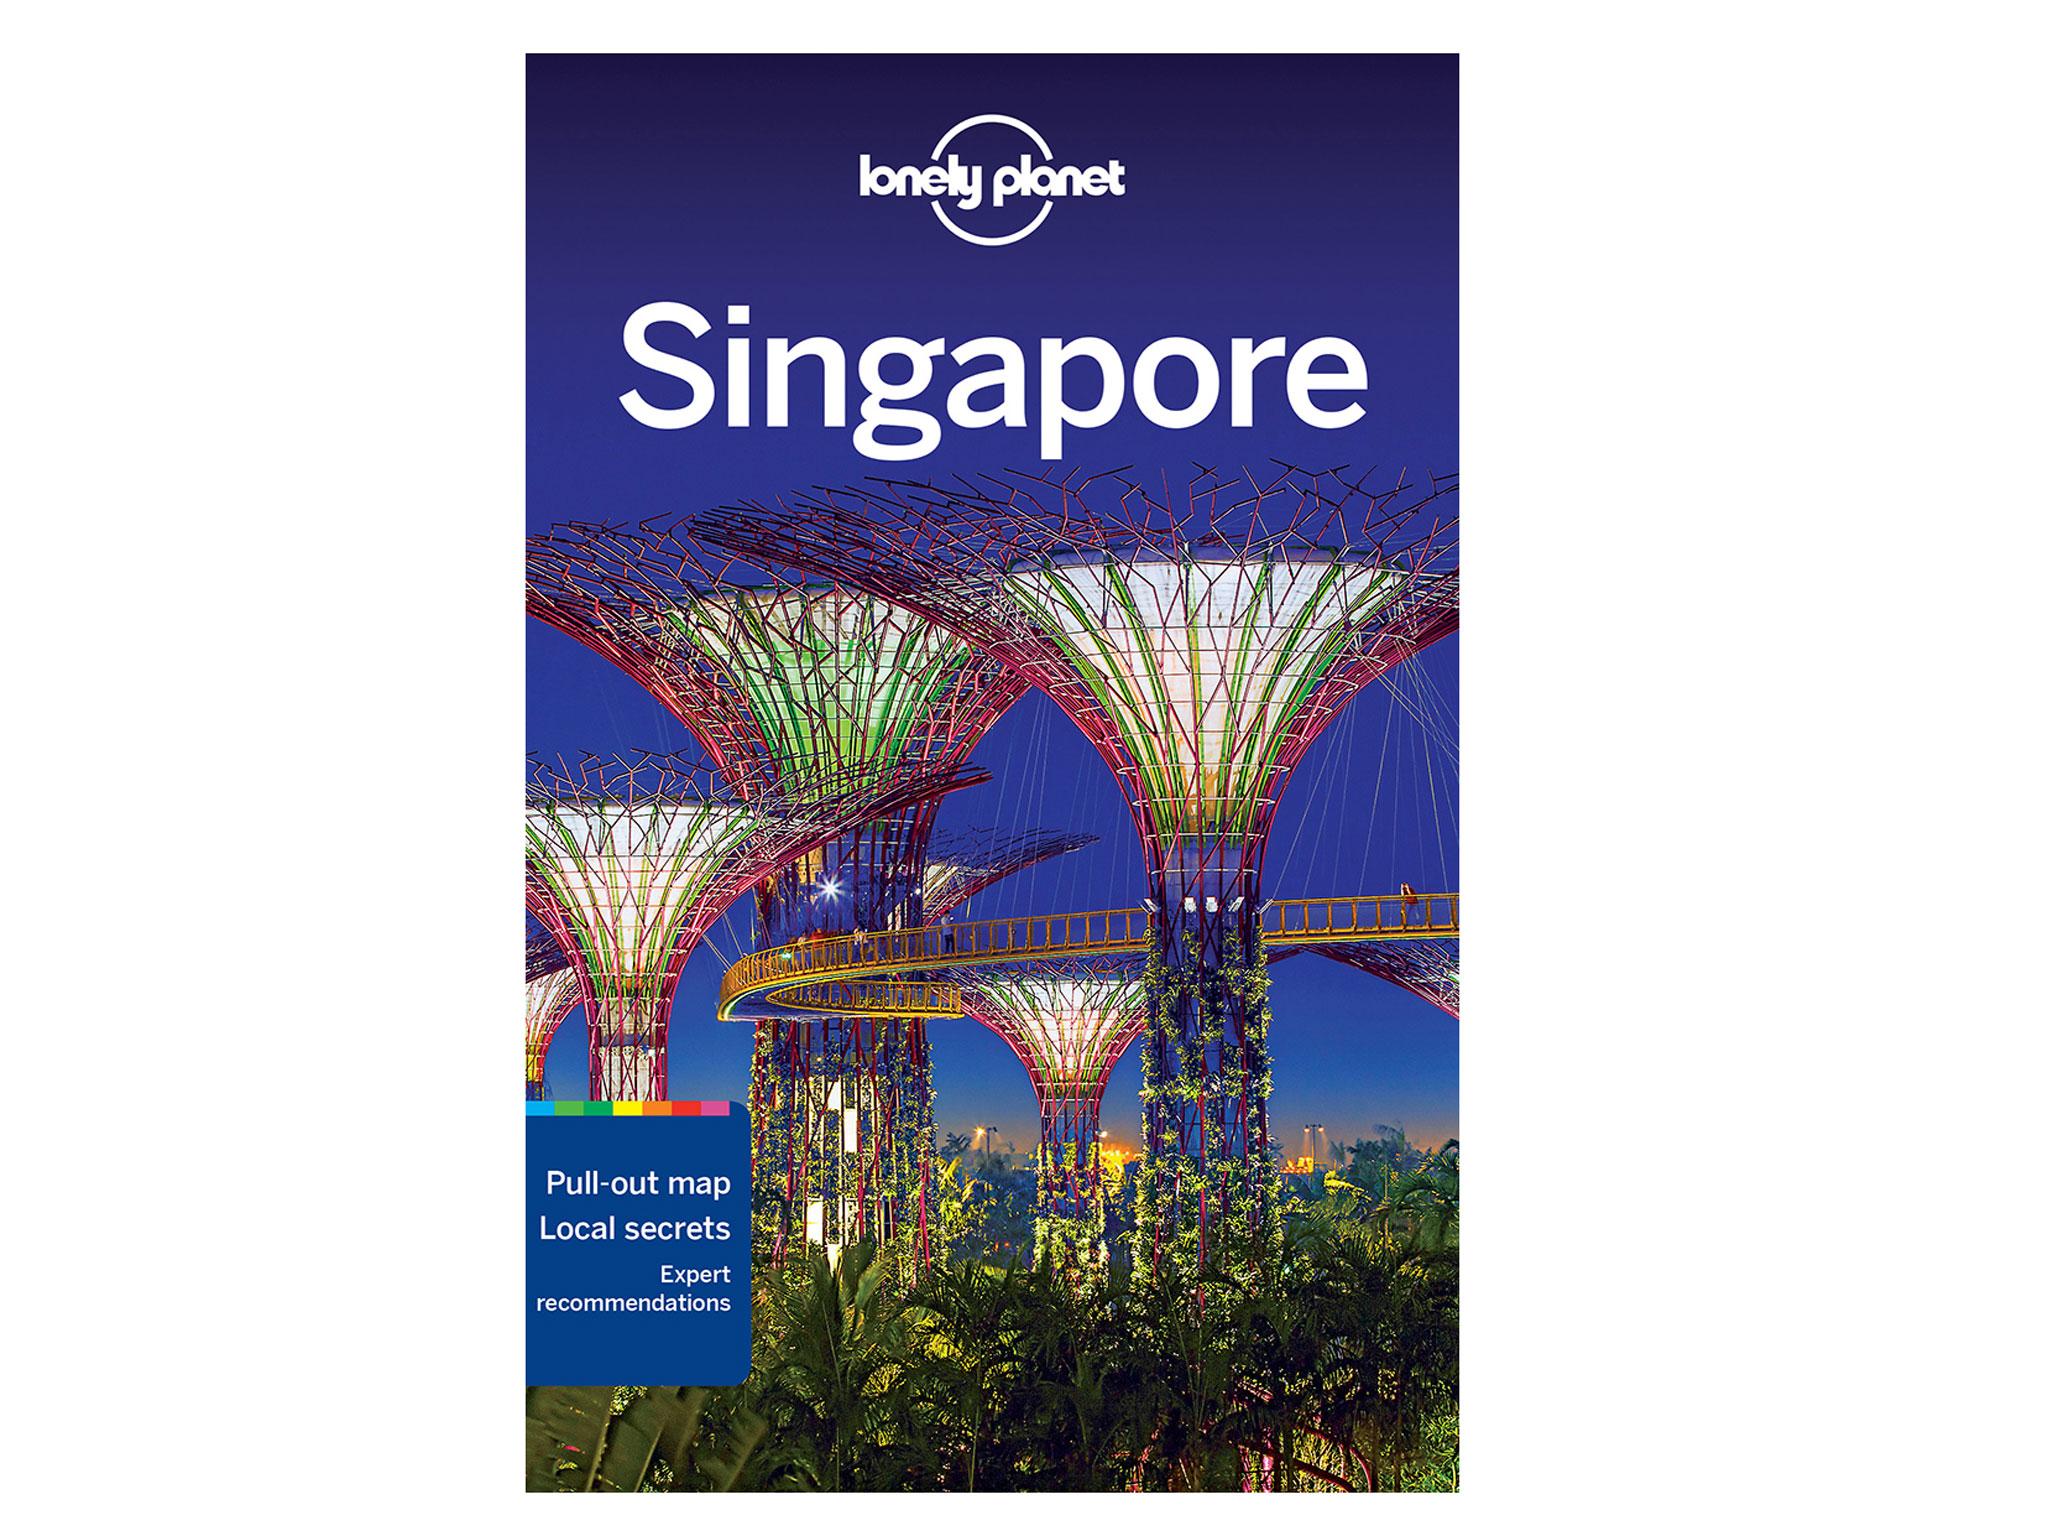 travel bookstore singapore